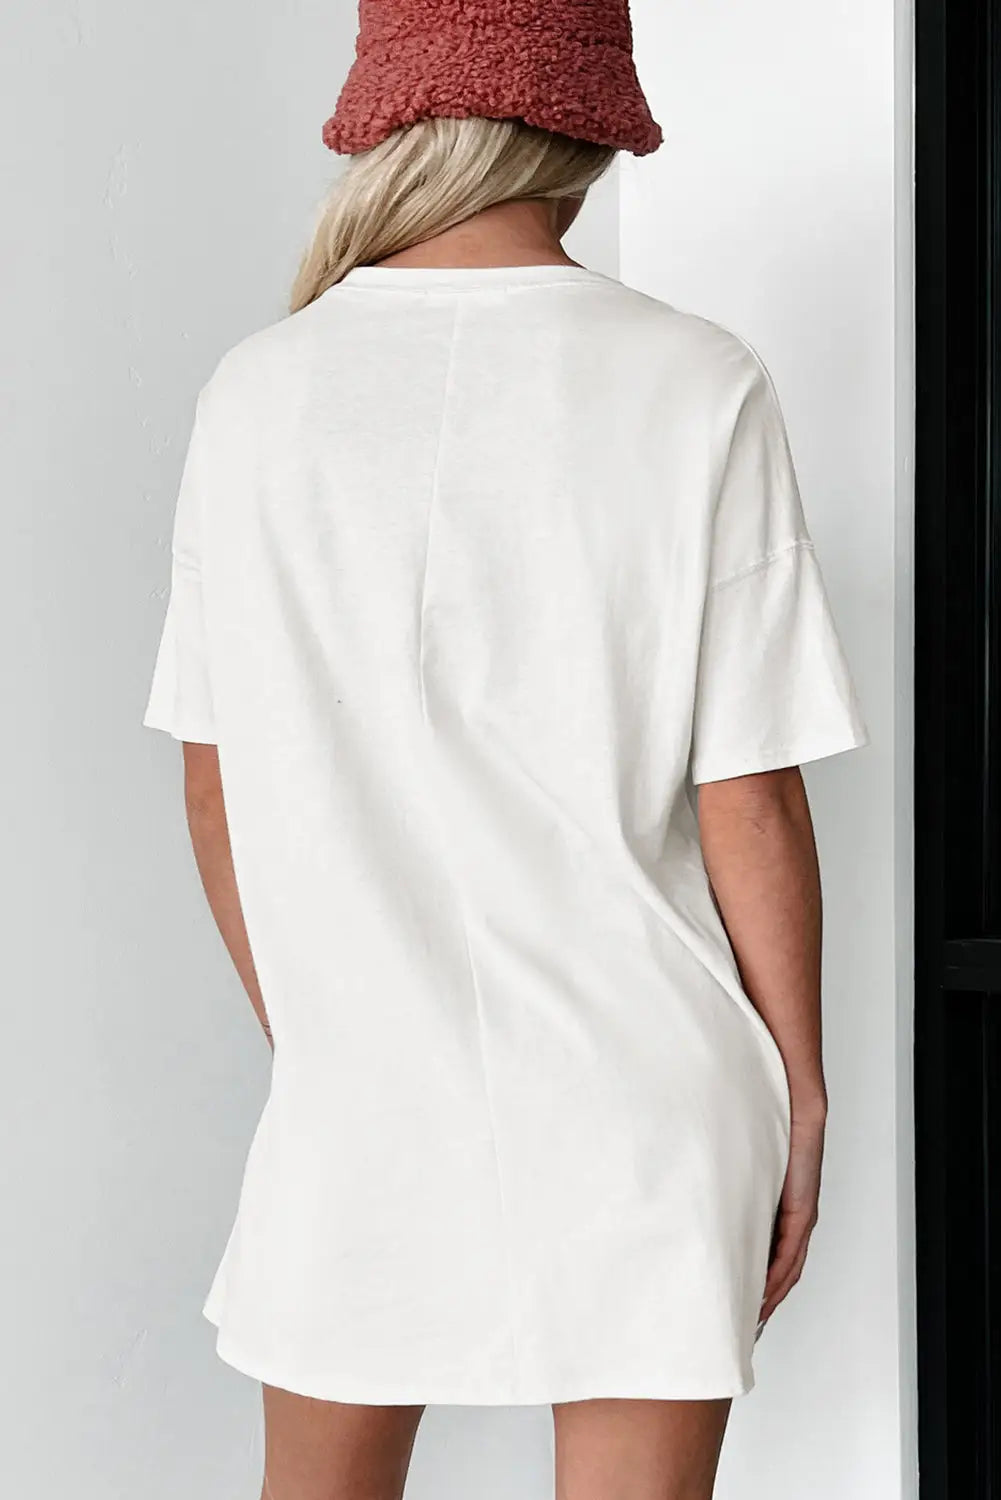 White basic tunic t shirt - t-shirts